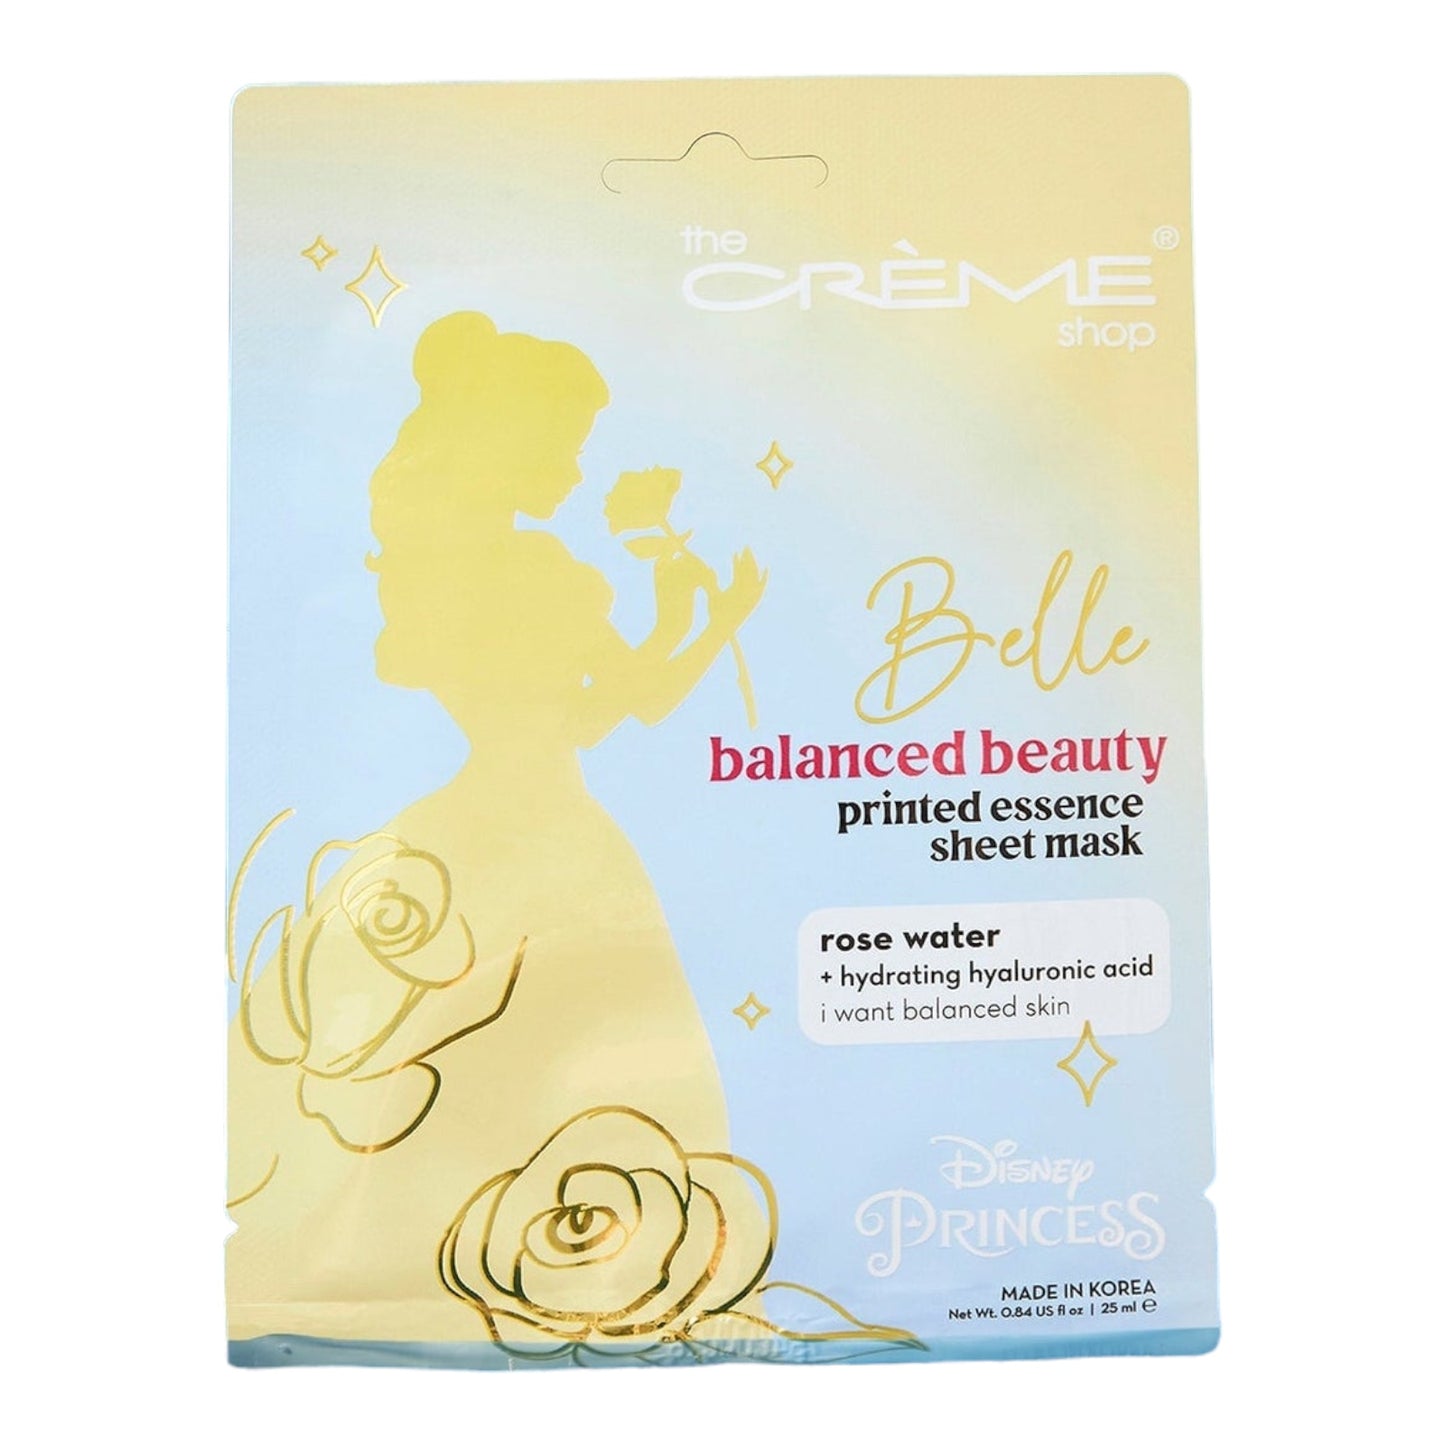 Belle Balanced Beauty Printed Essence Sheet Mask - The Creme Shop X Disney